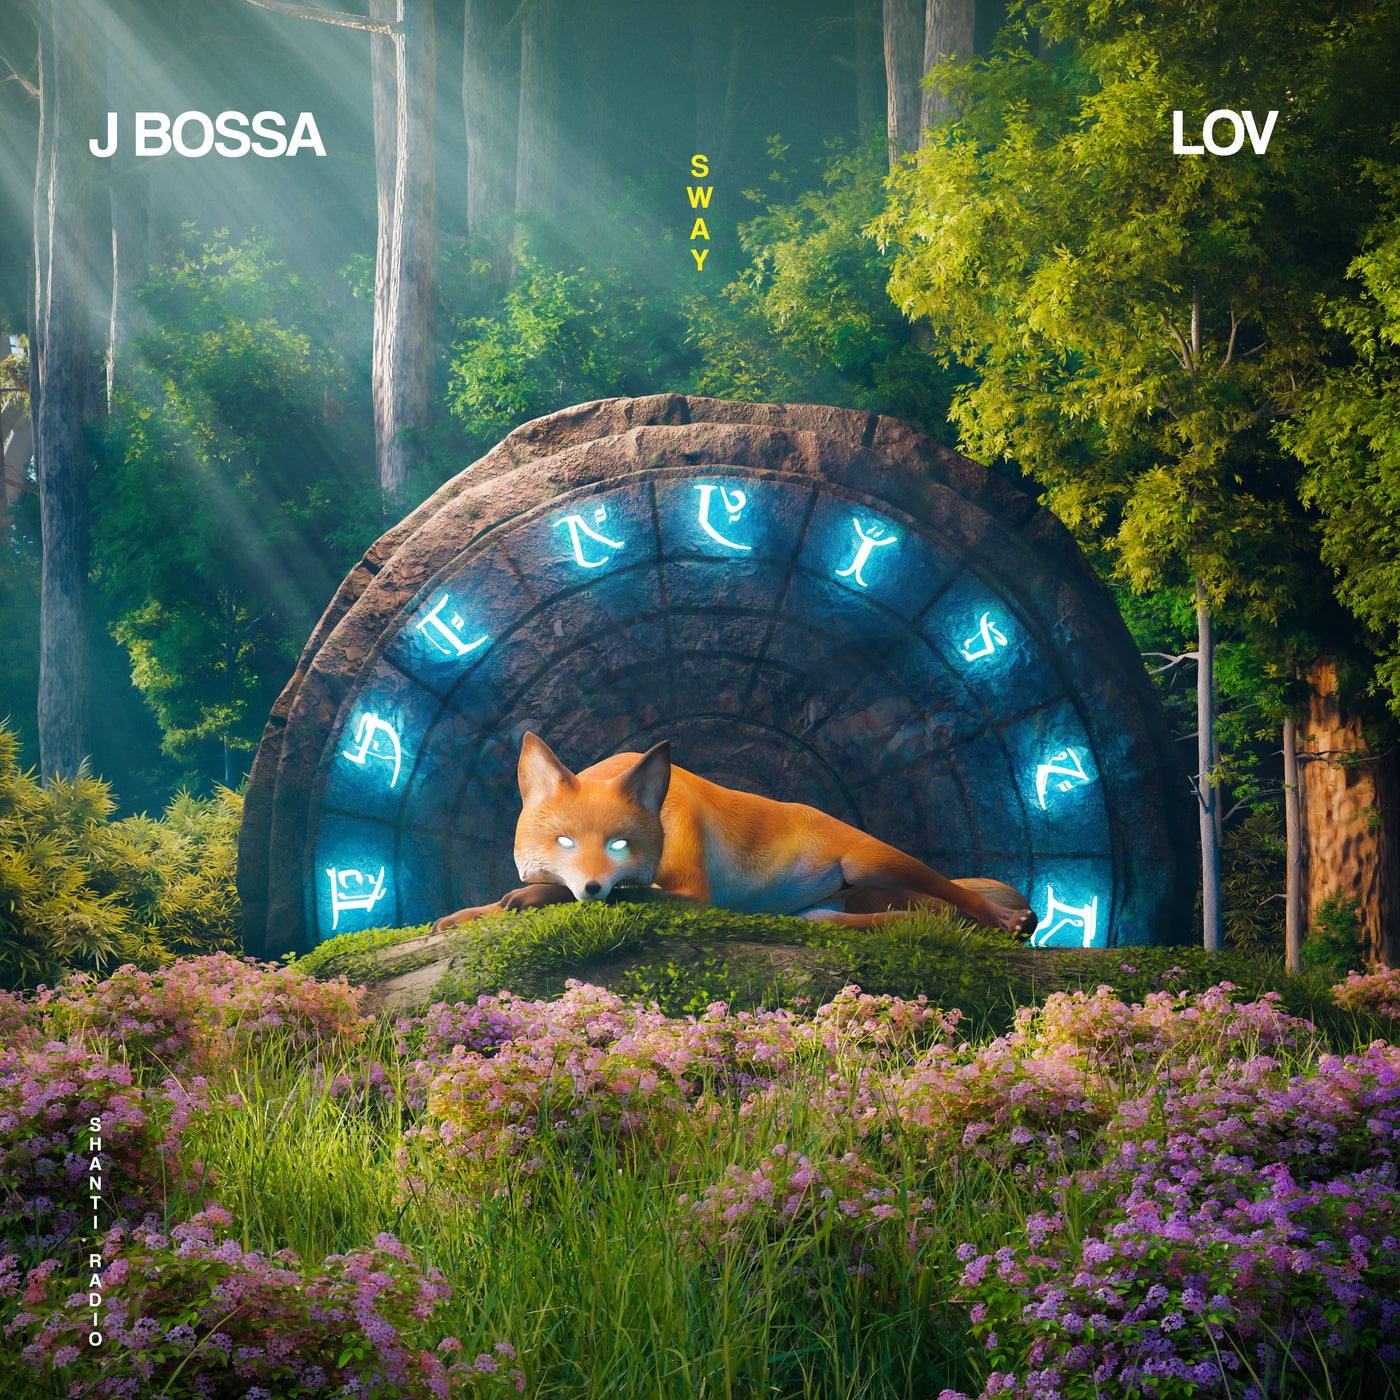 LOV, J Bossa - Sway (Amonita Extended Remix)